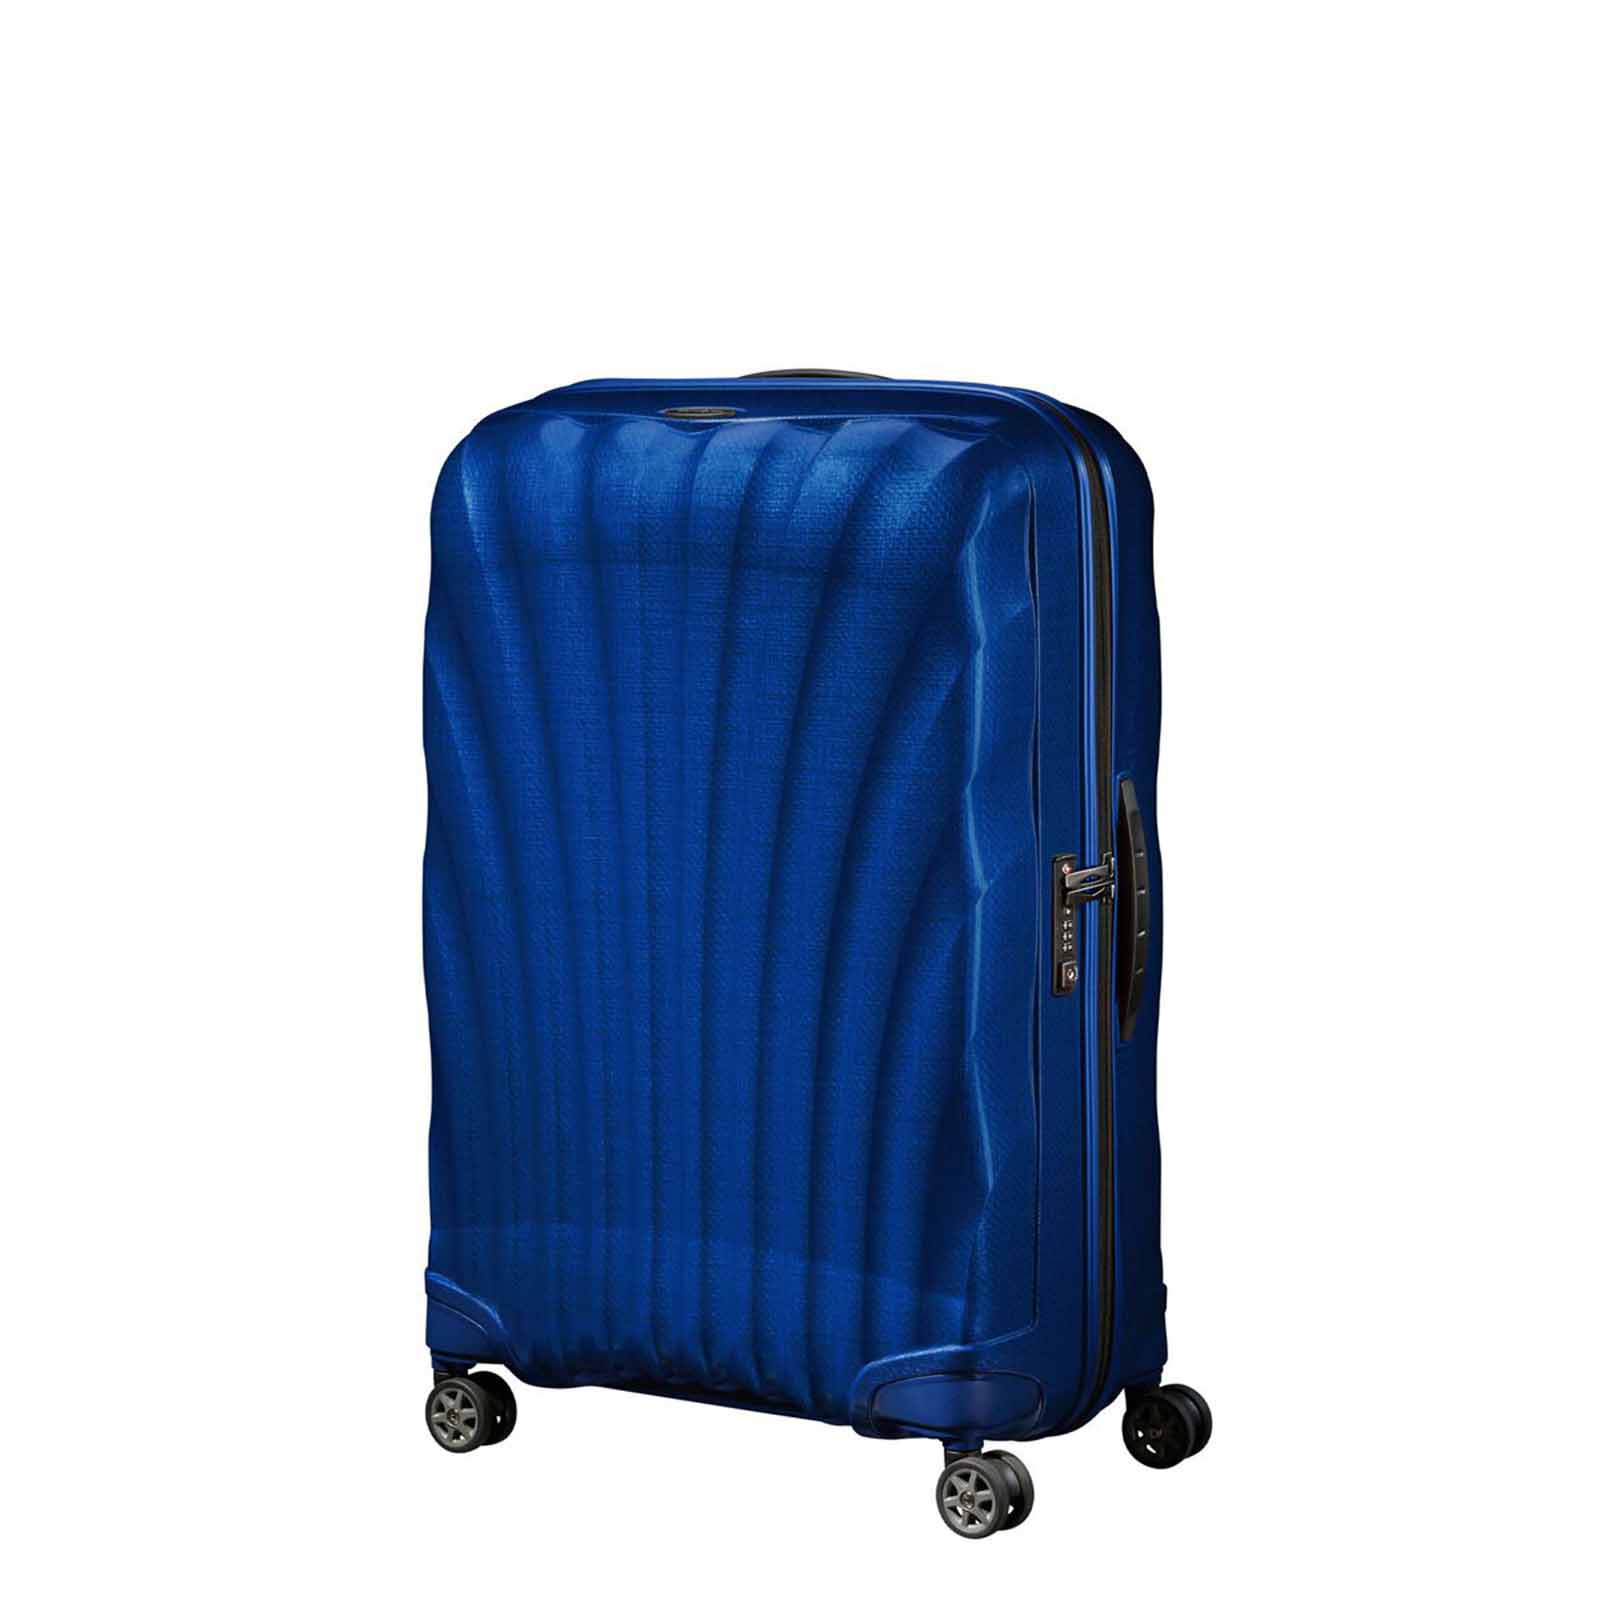 Samsonite-C-Lite-75cm-Suitcase-Deep-Blue-Front-Angle